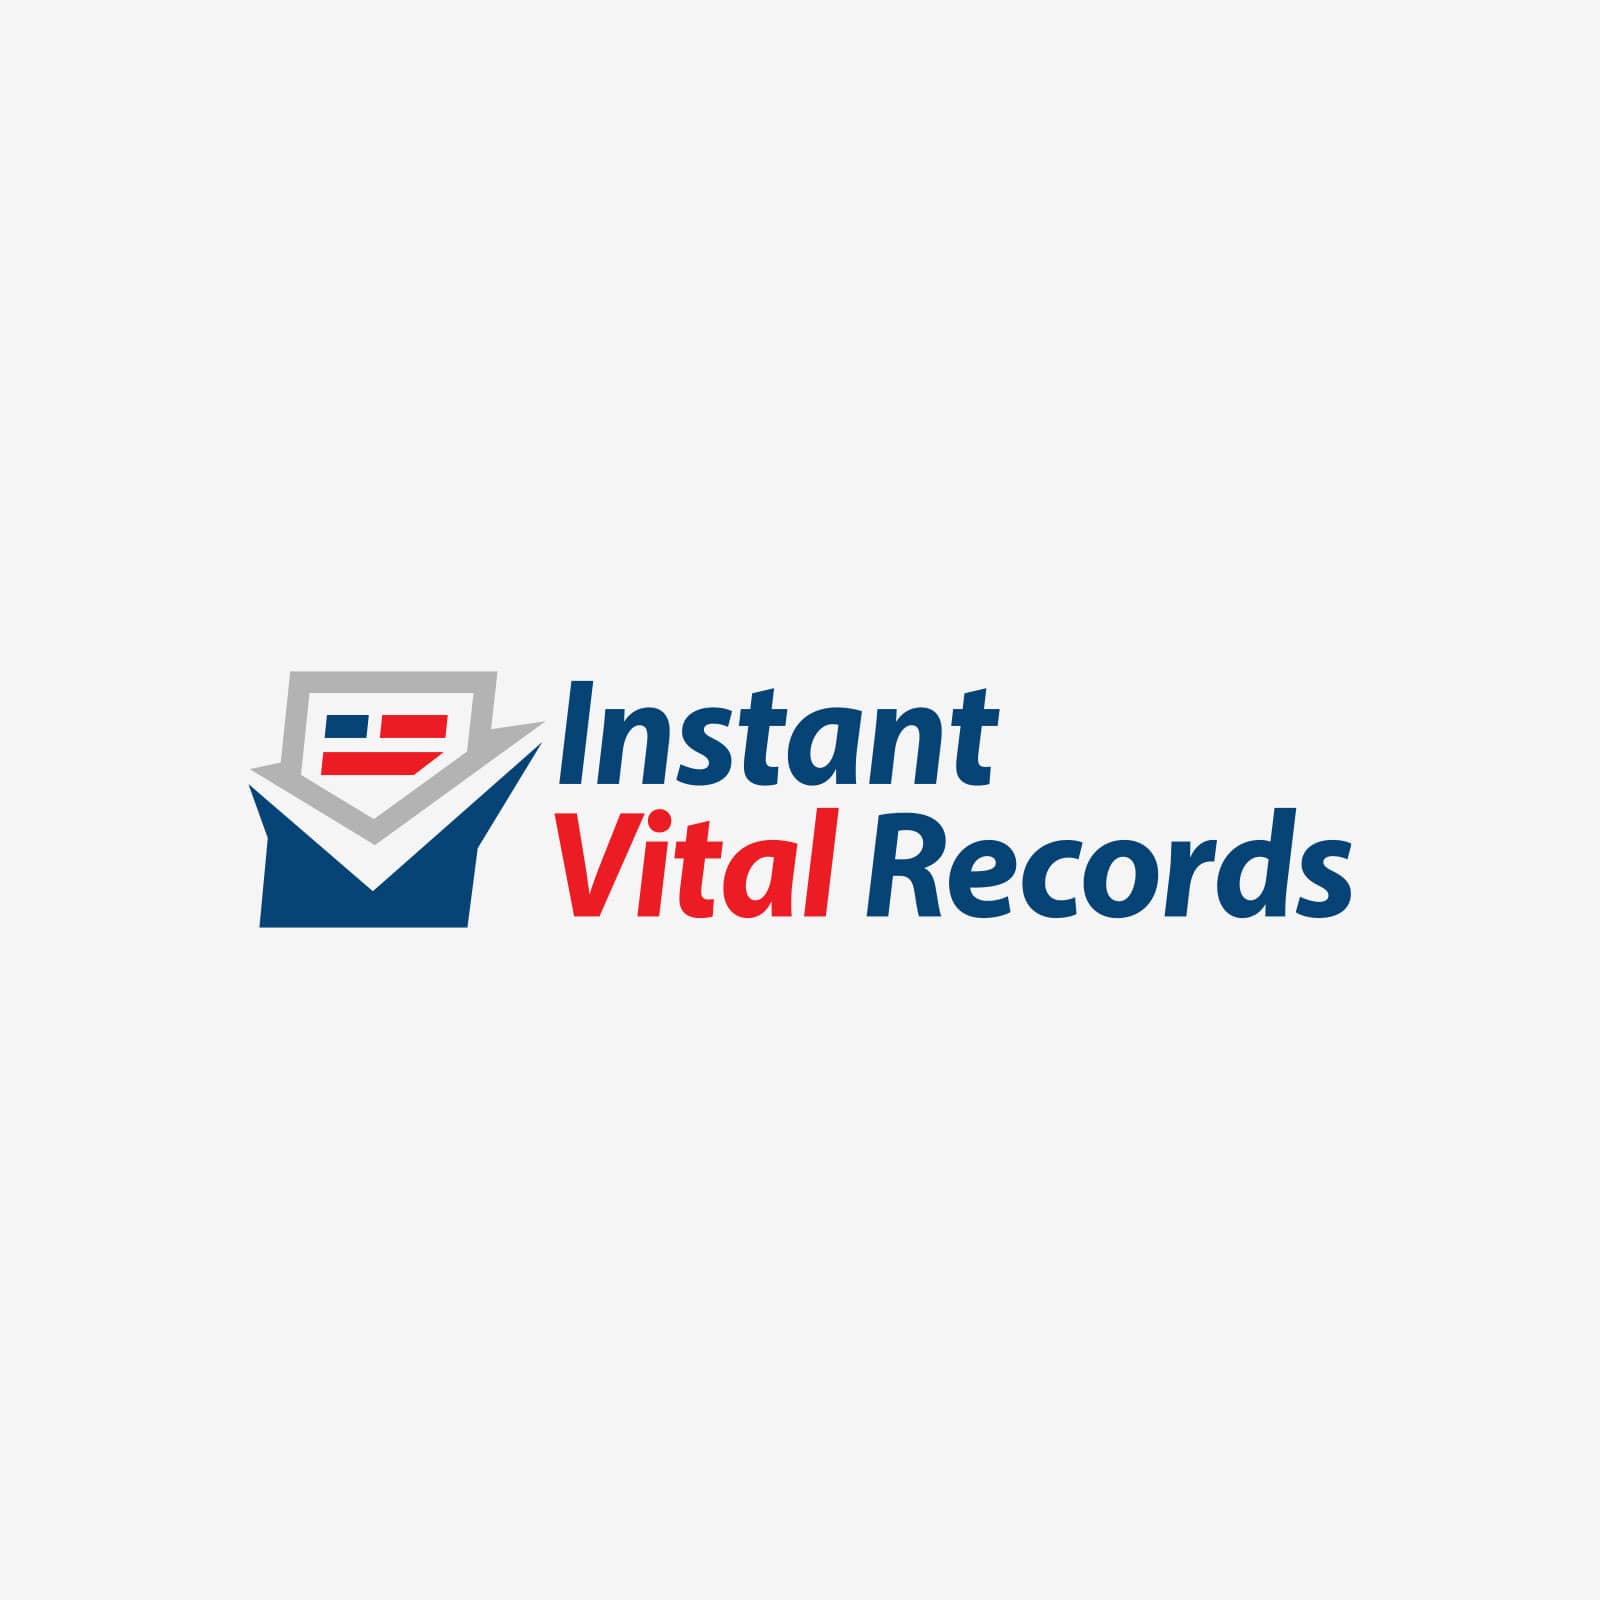 Logo design for Instant Vital Records